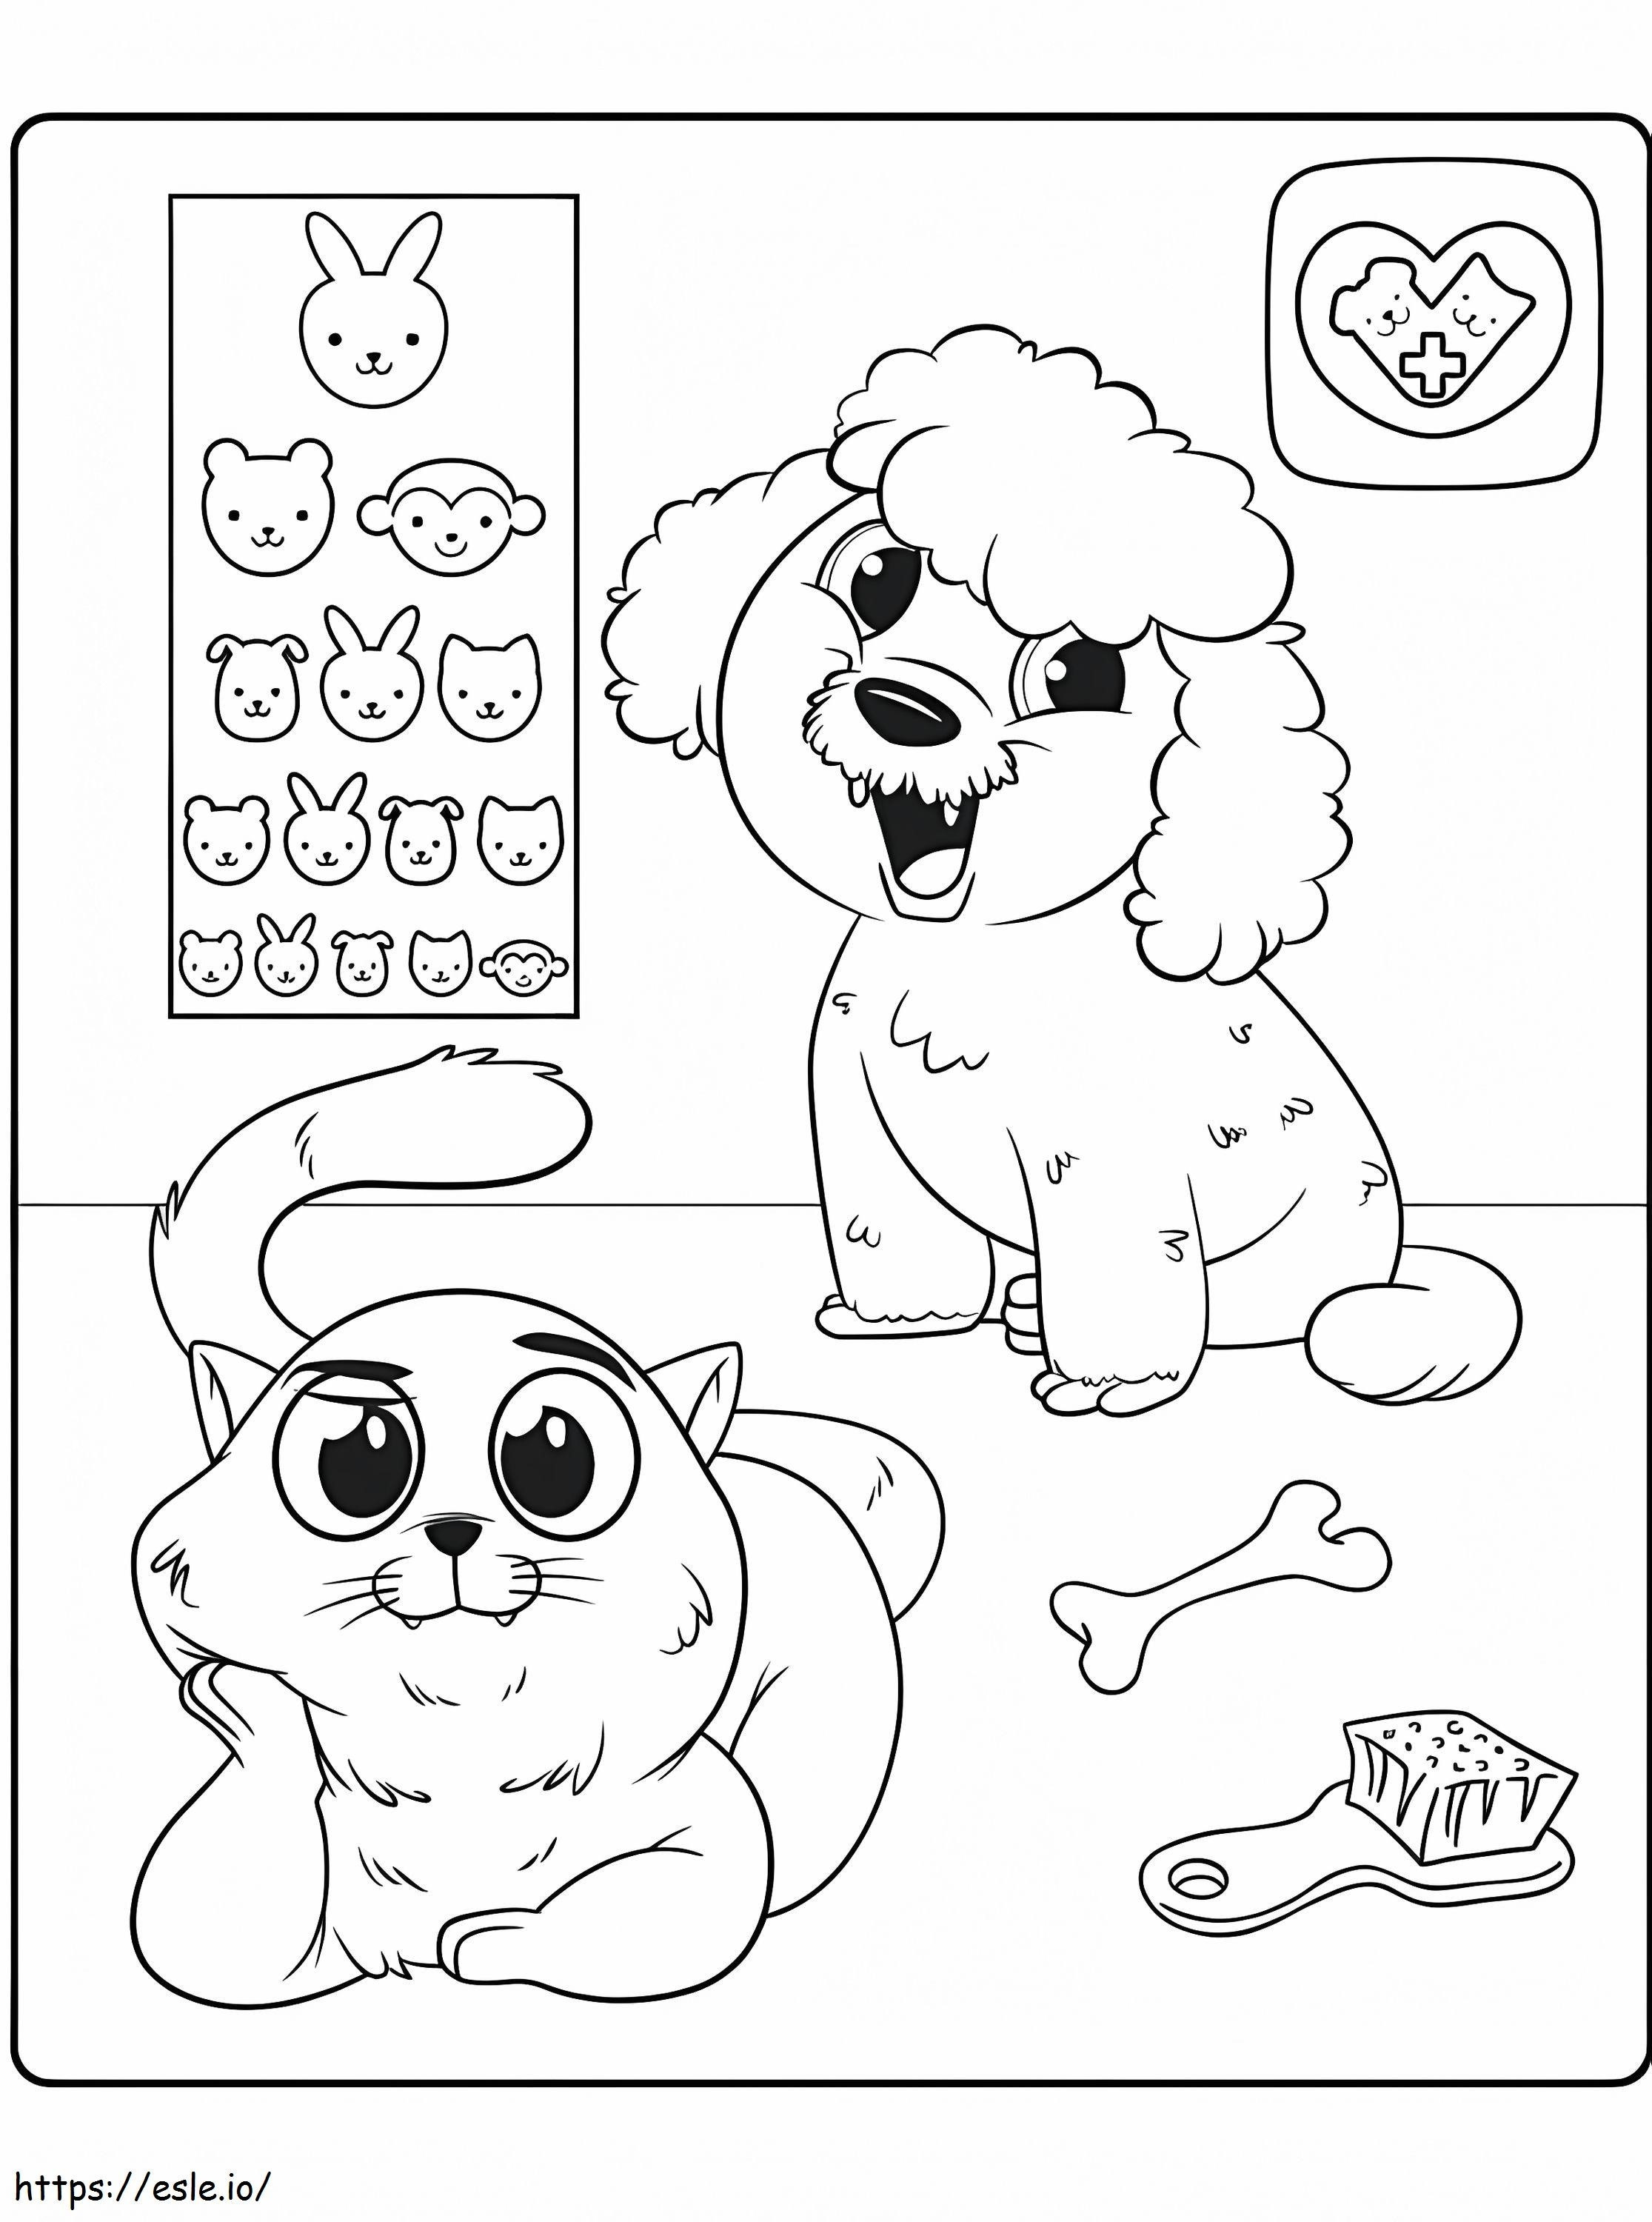 Funny Washimals coloring page